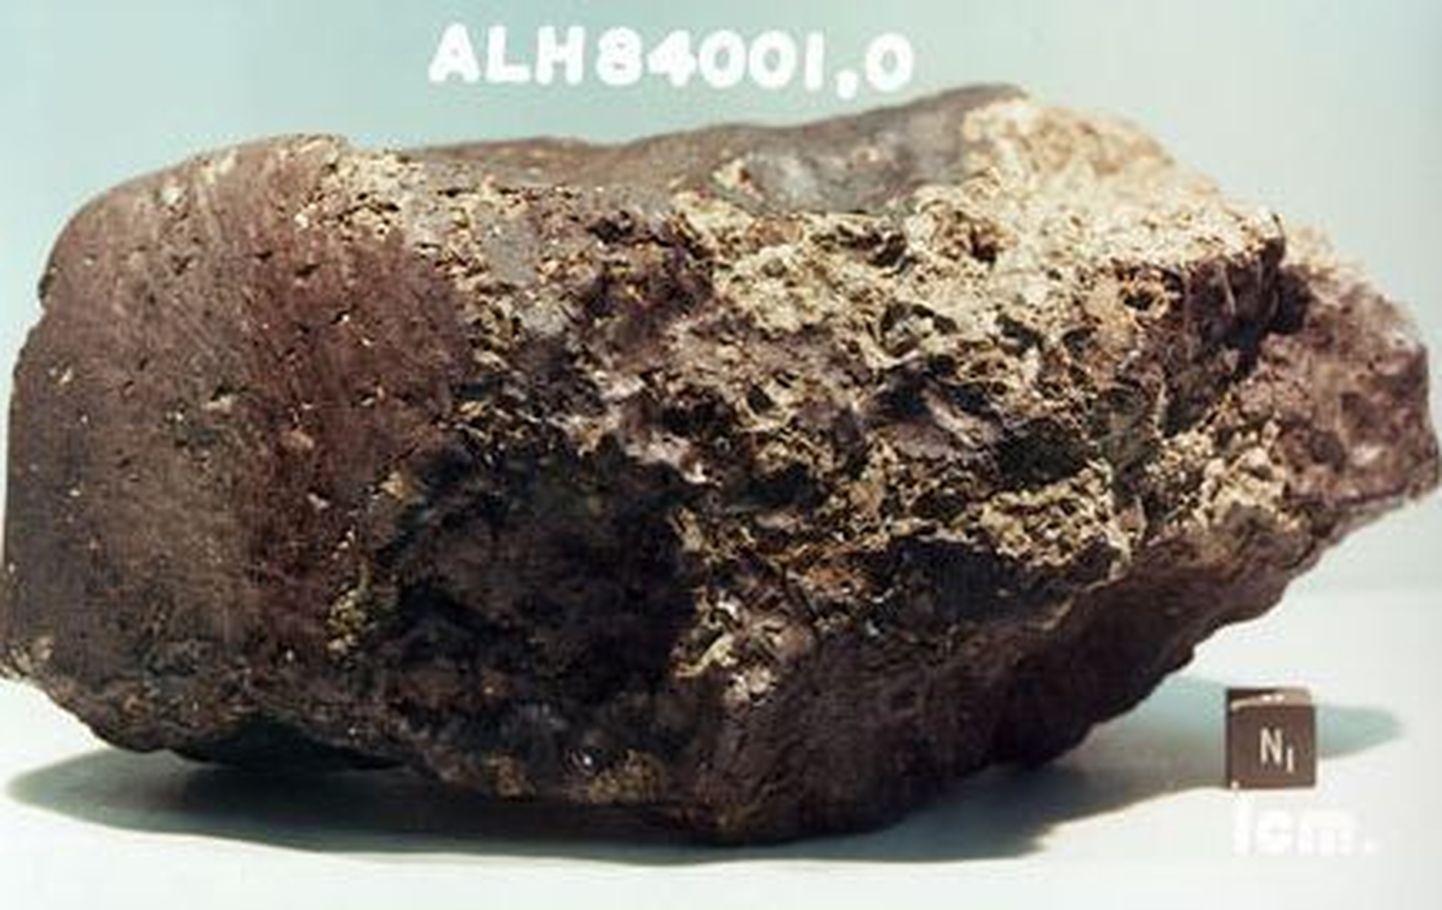 Meteoriit Allan Hills 84001